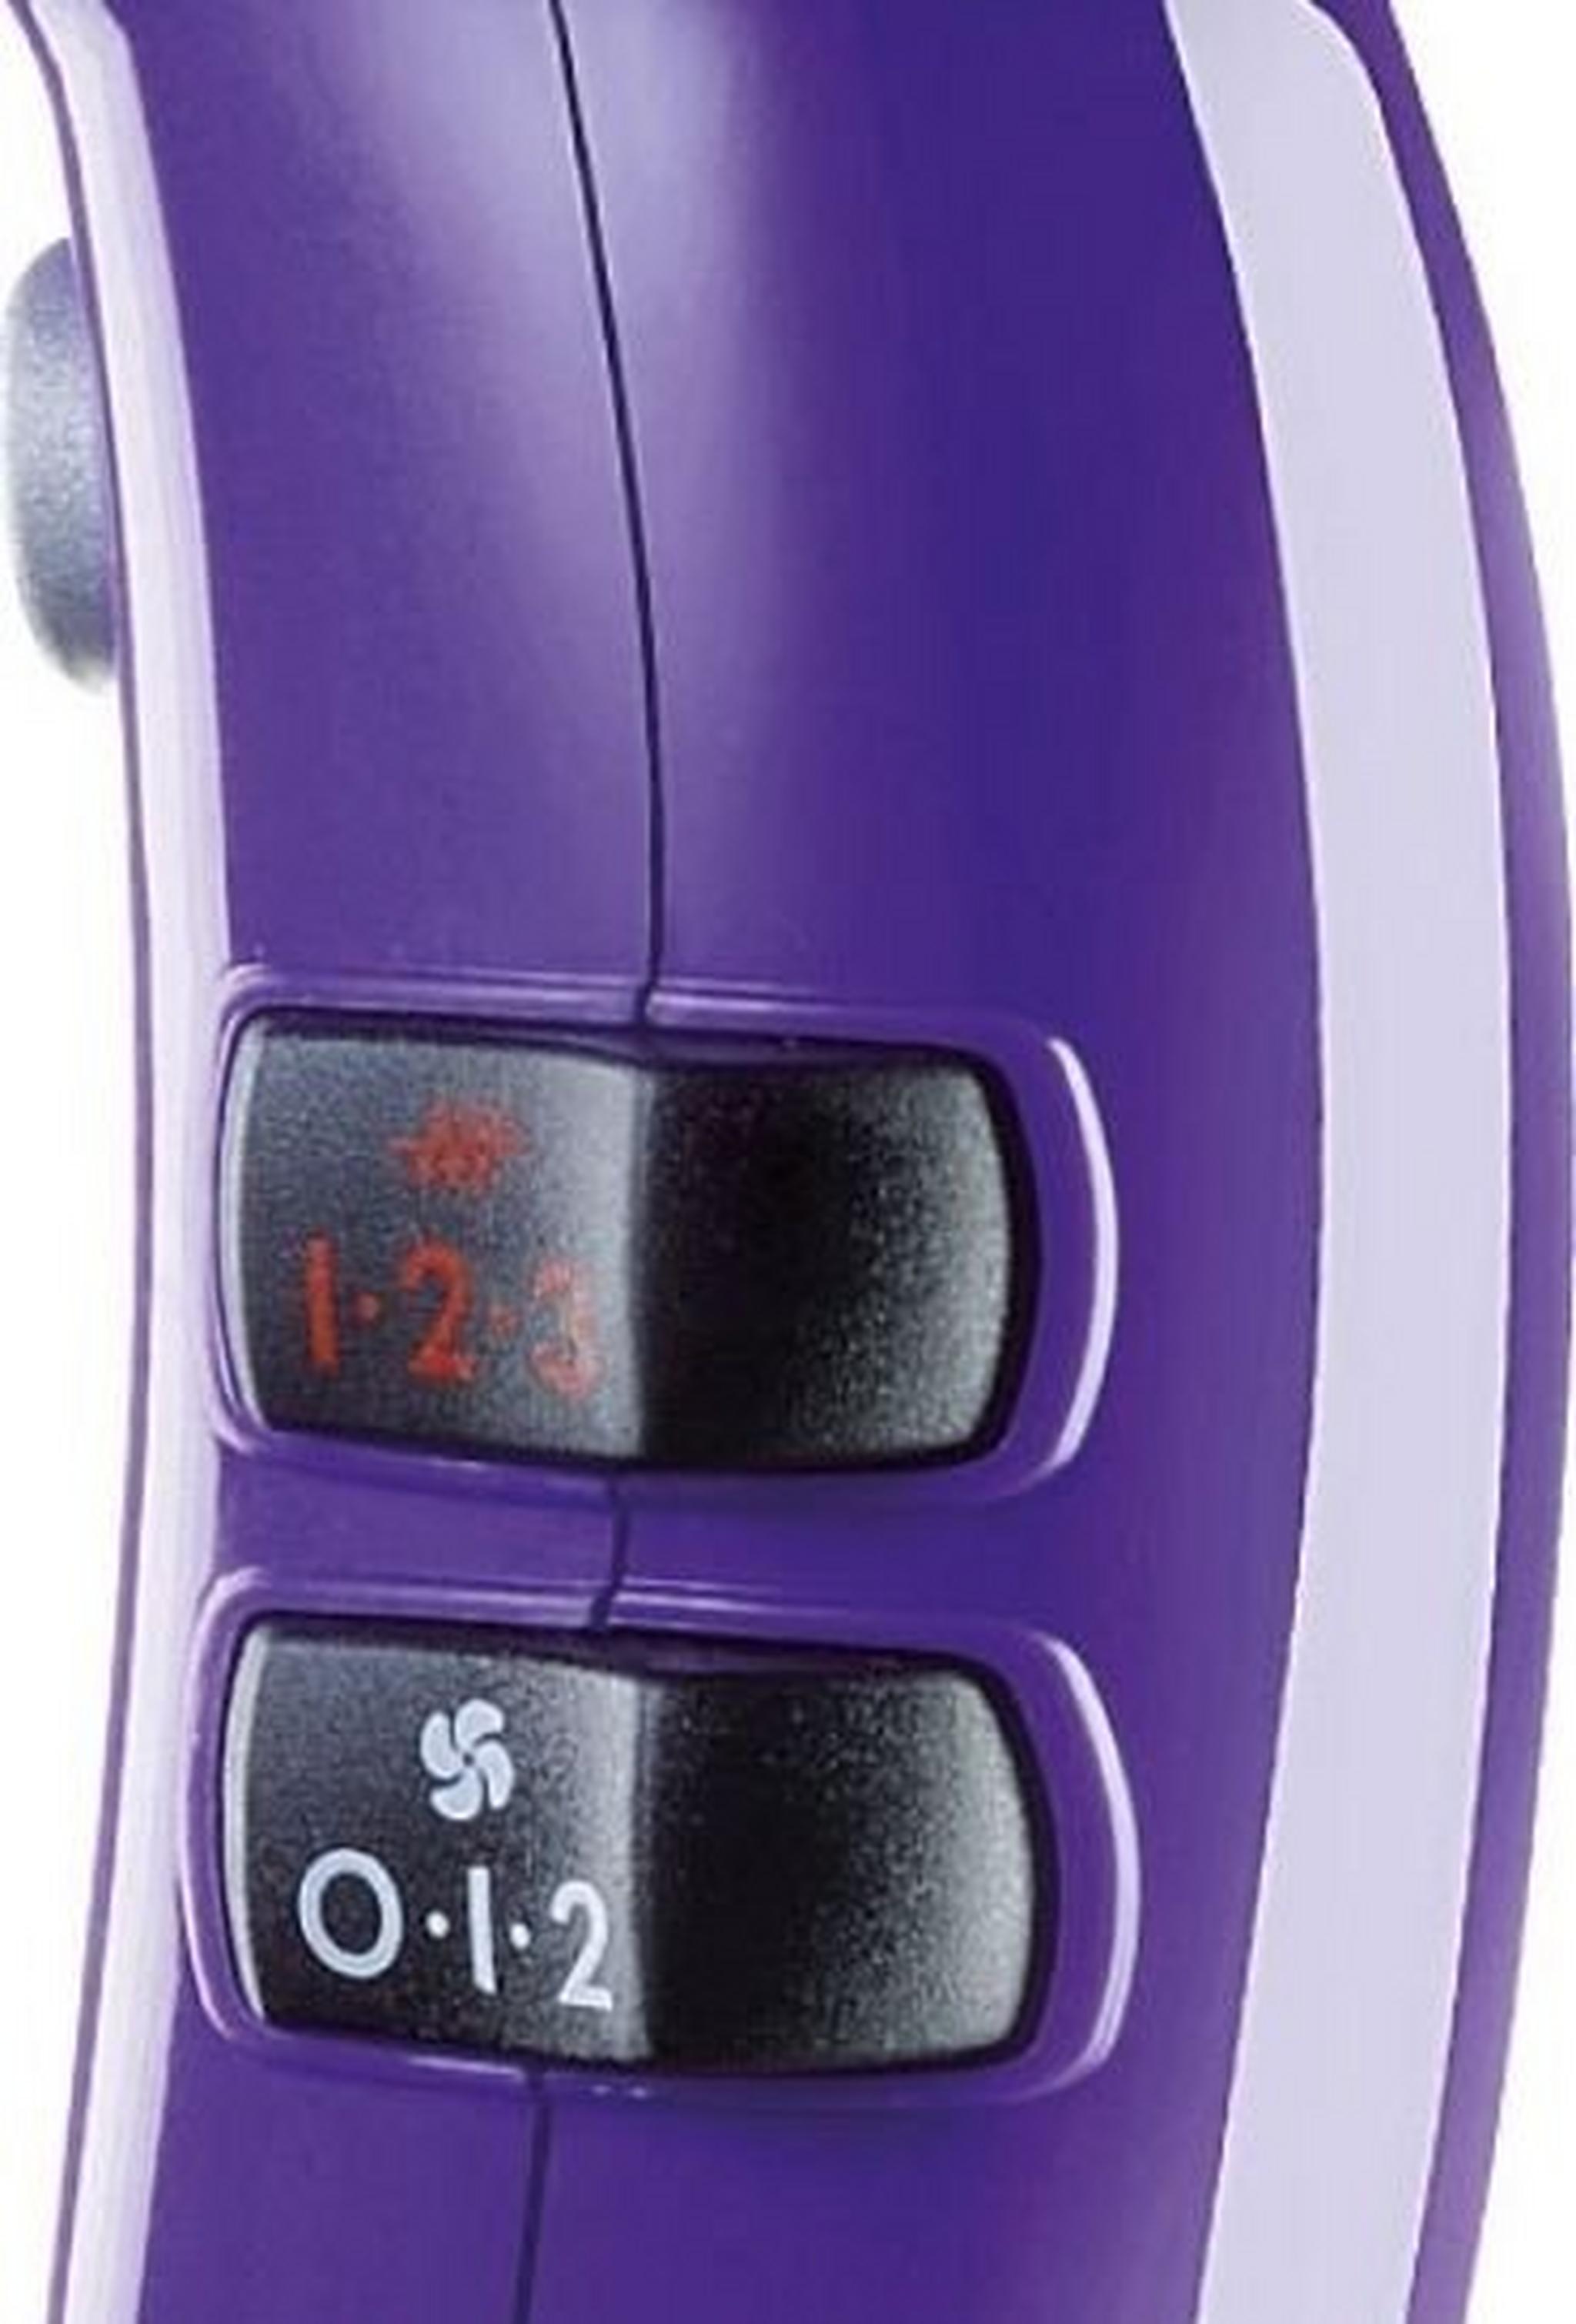 Valera Rotocord 2400W Hair Dryer (VA8605) - Purple